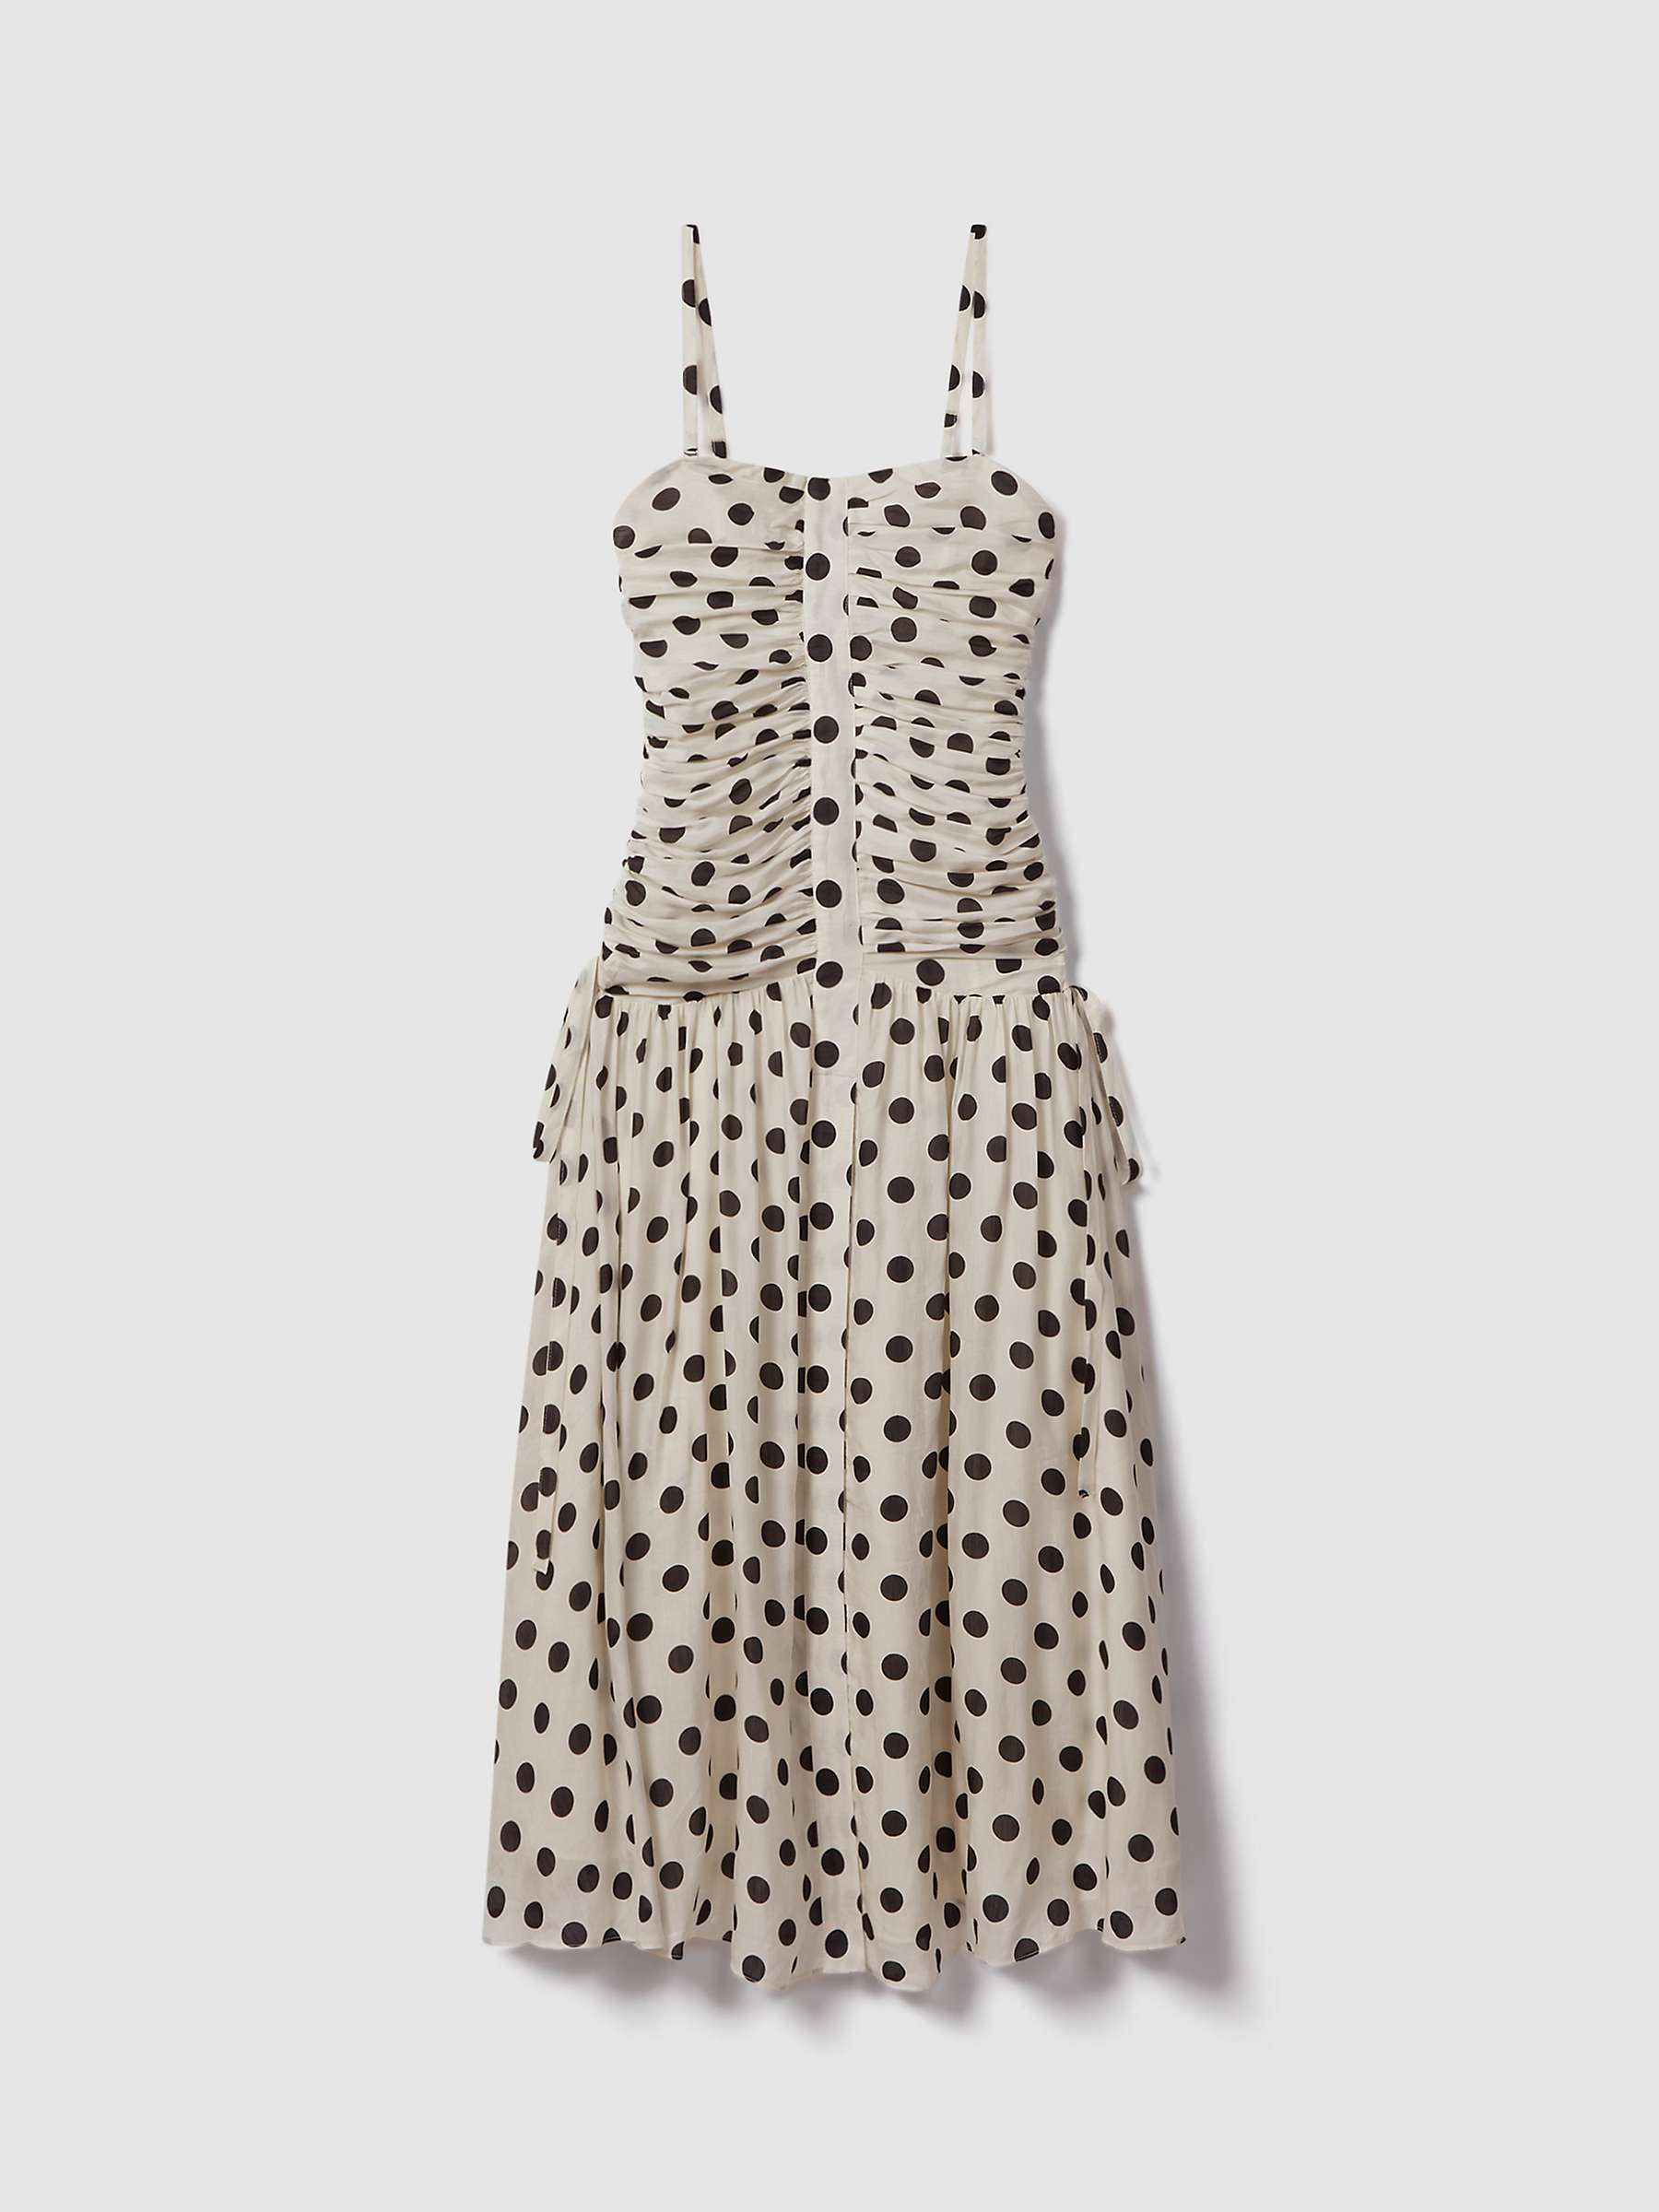 Buy Reiss Rue Ruched Polka Dot Maxi Dress, White/Black Online at johnlewis.com